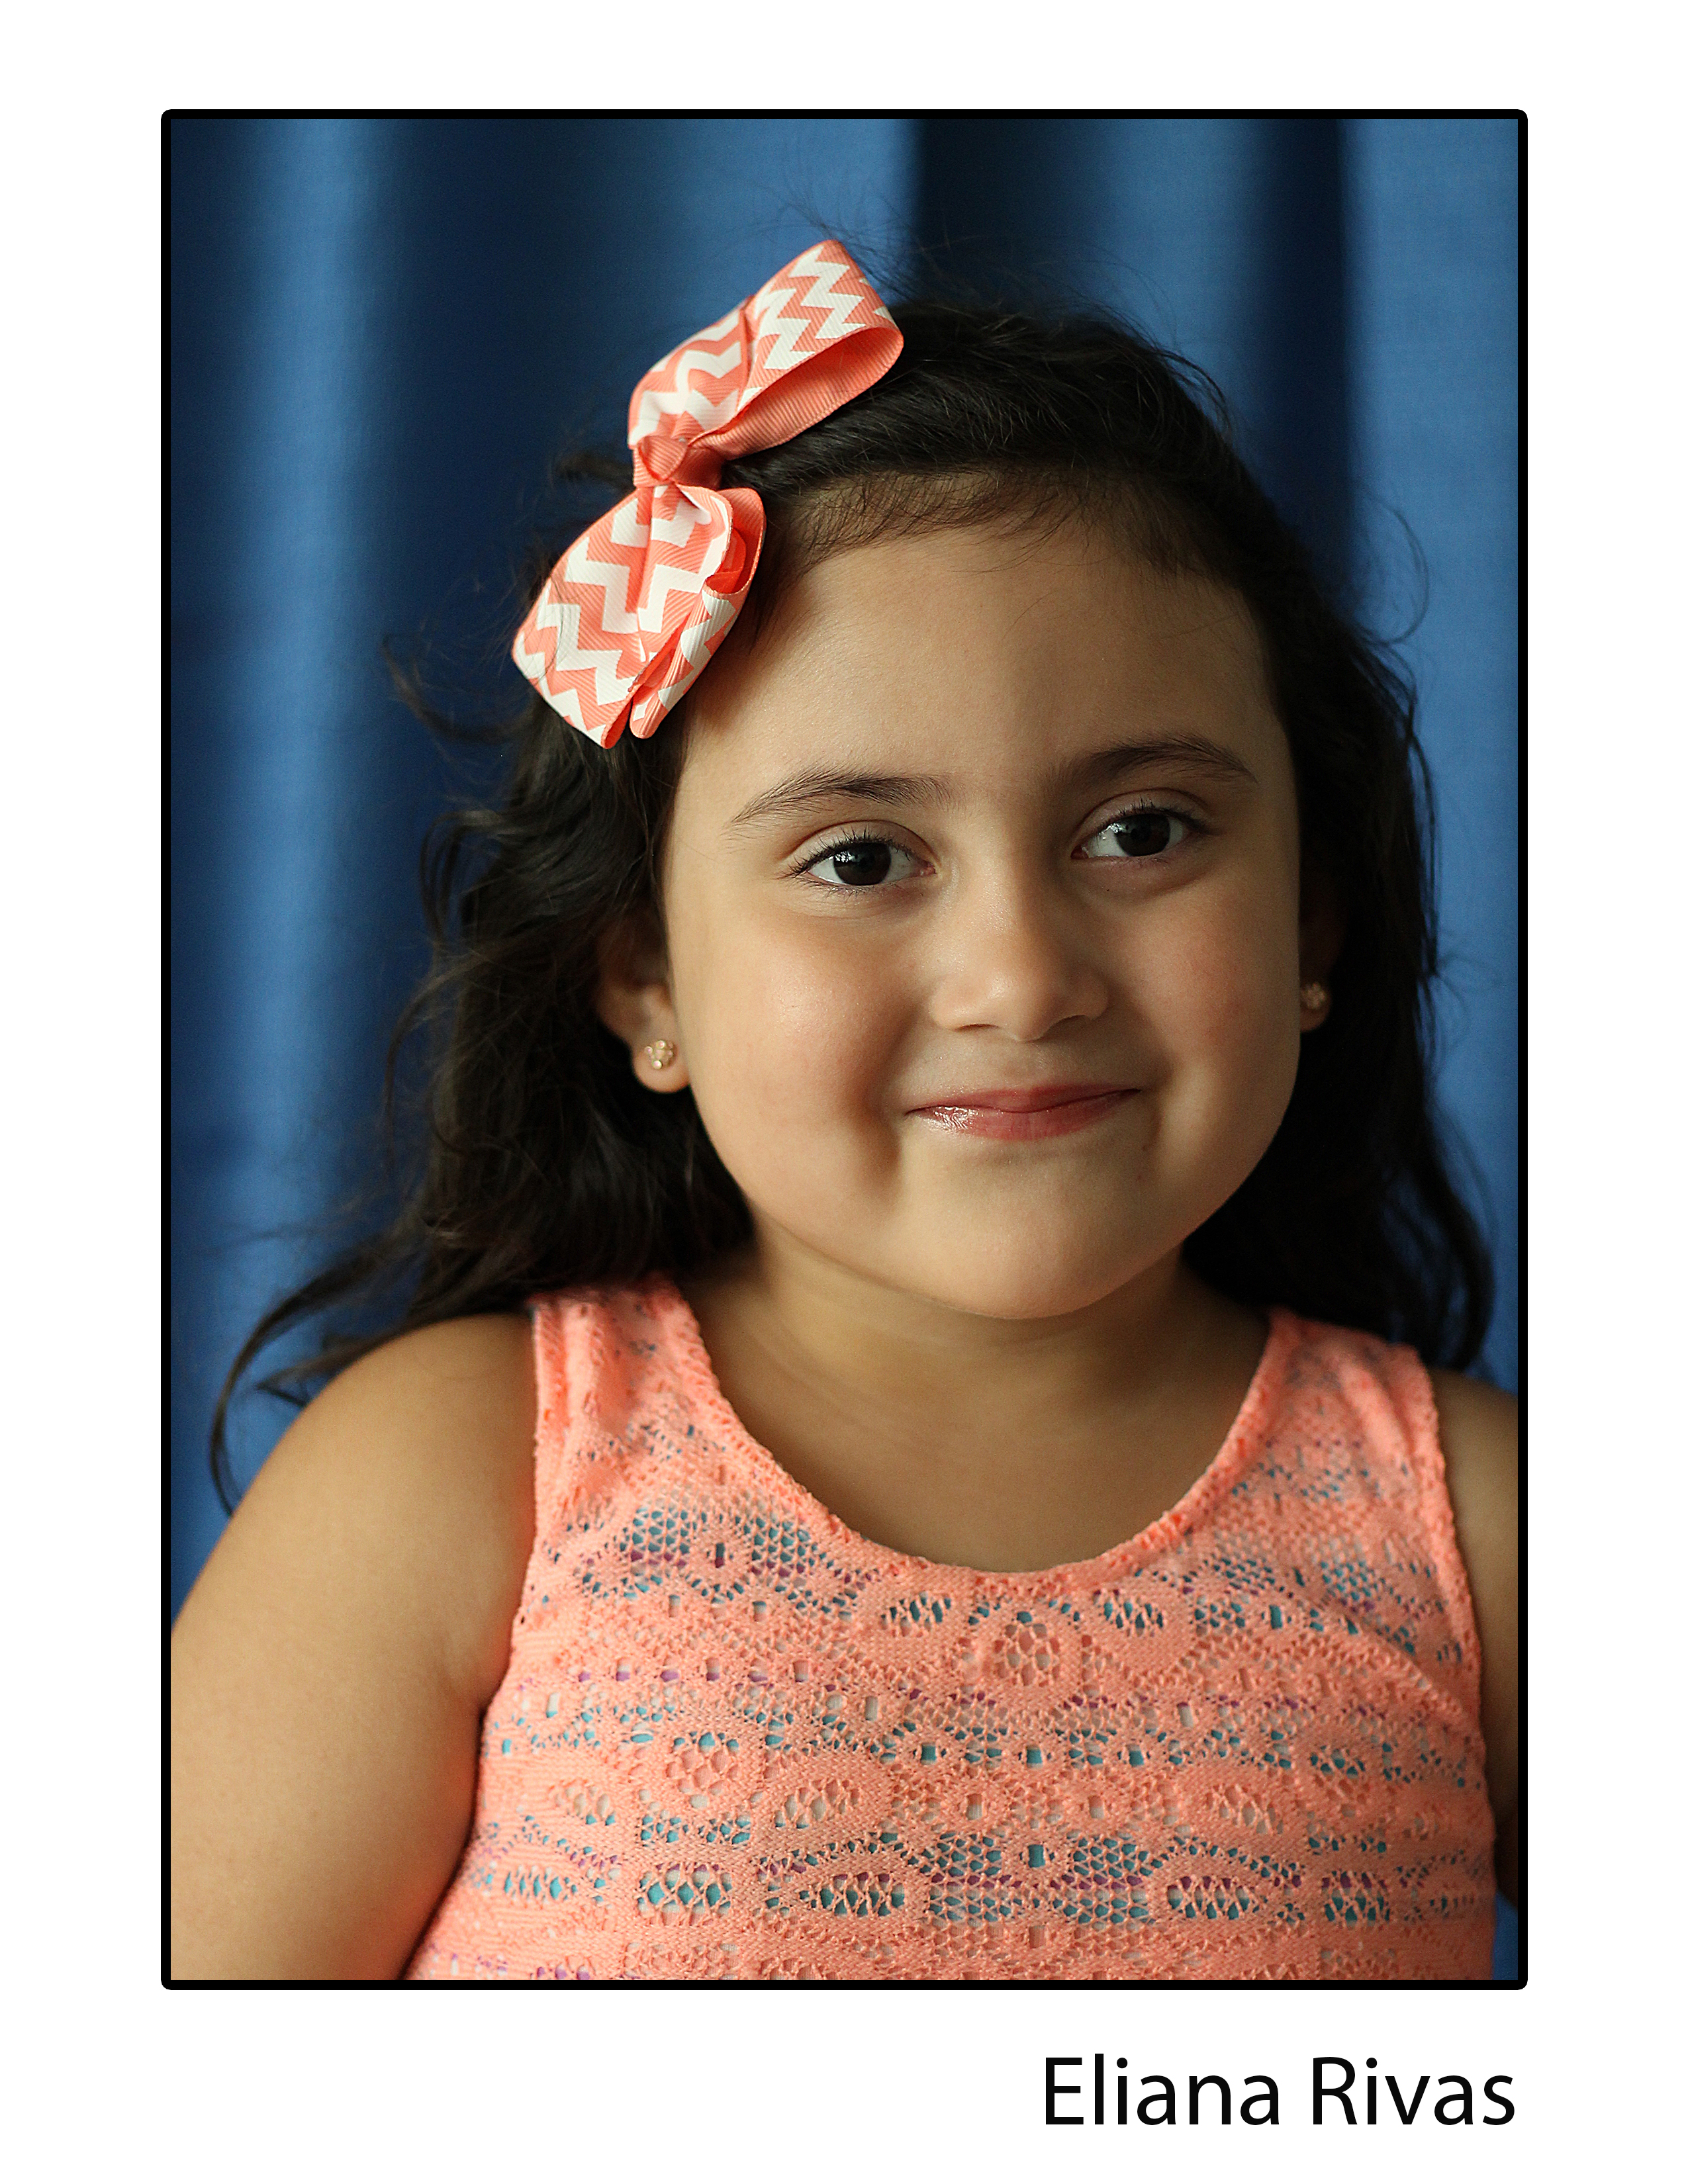 My Beautiful Daughter Eliana Rivas in her recent Headshot!